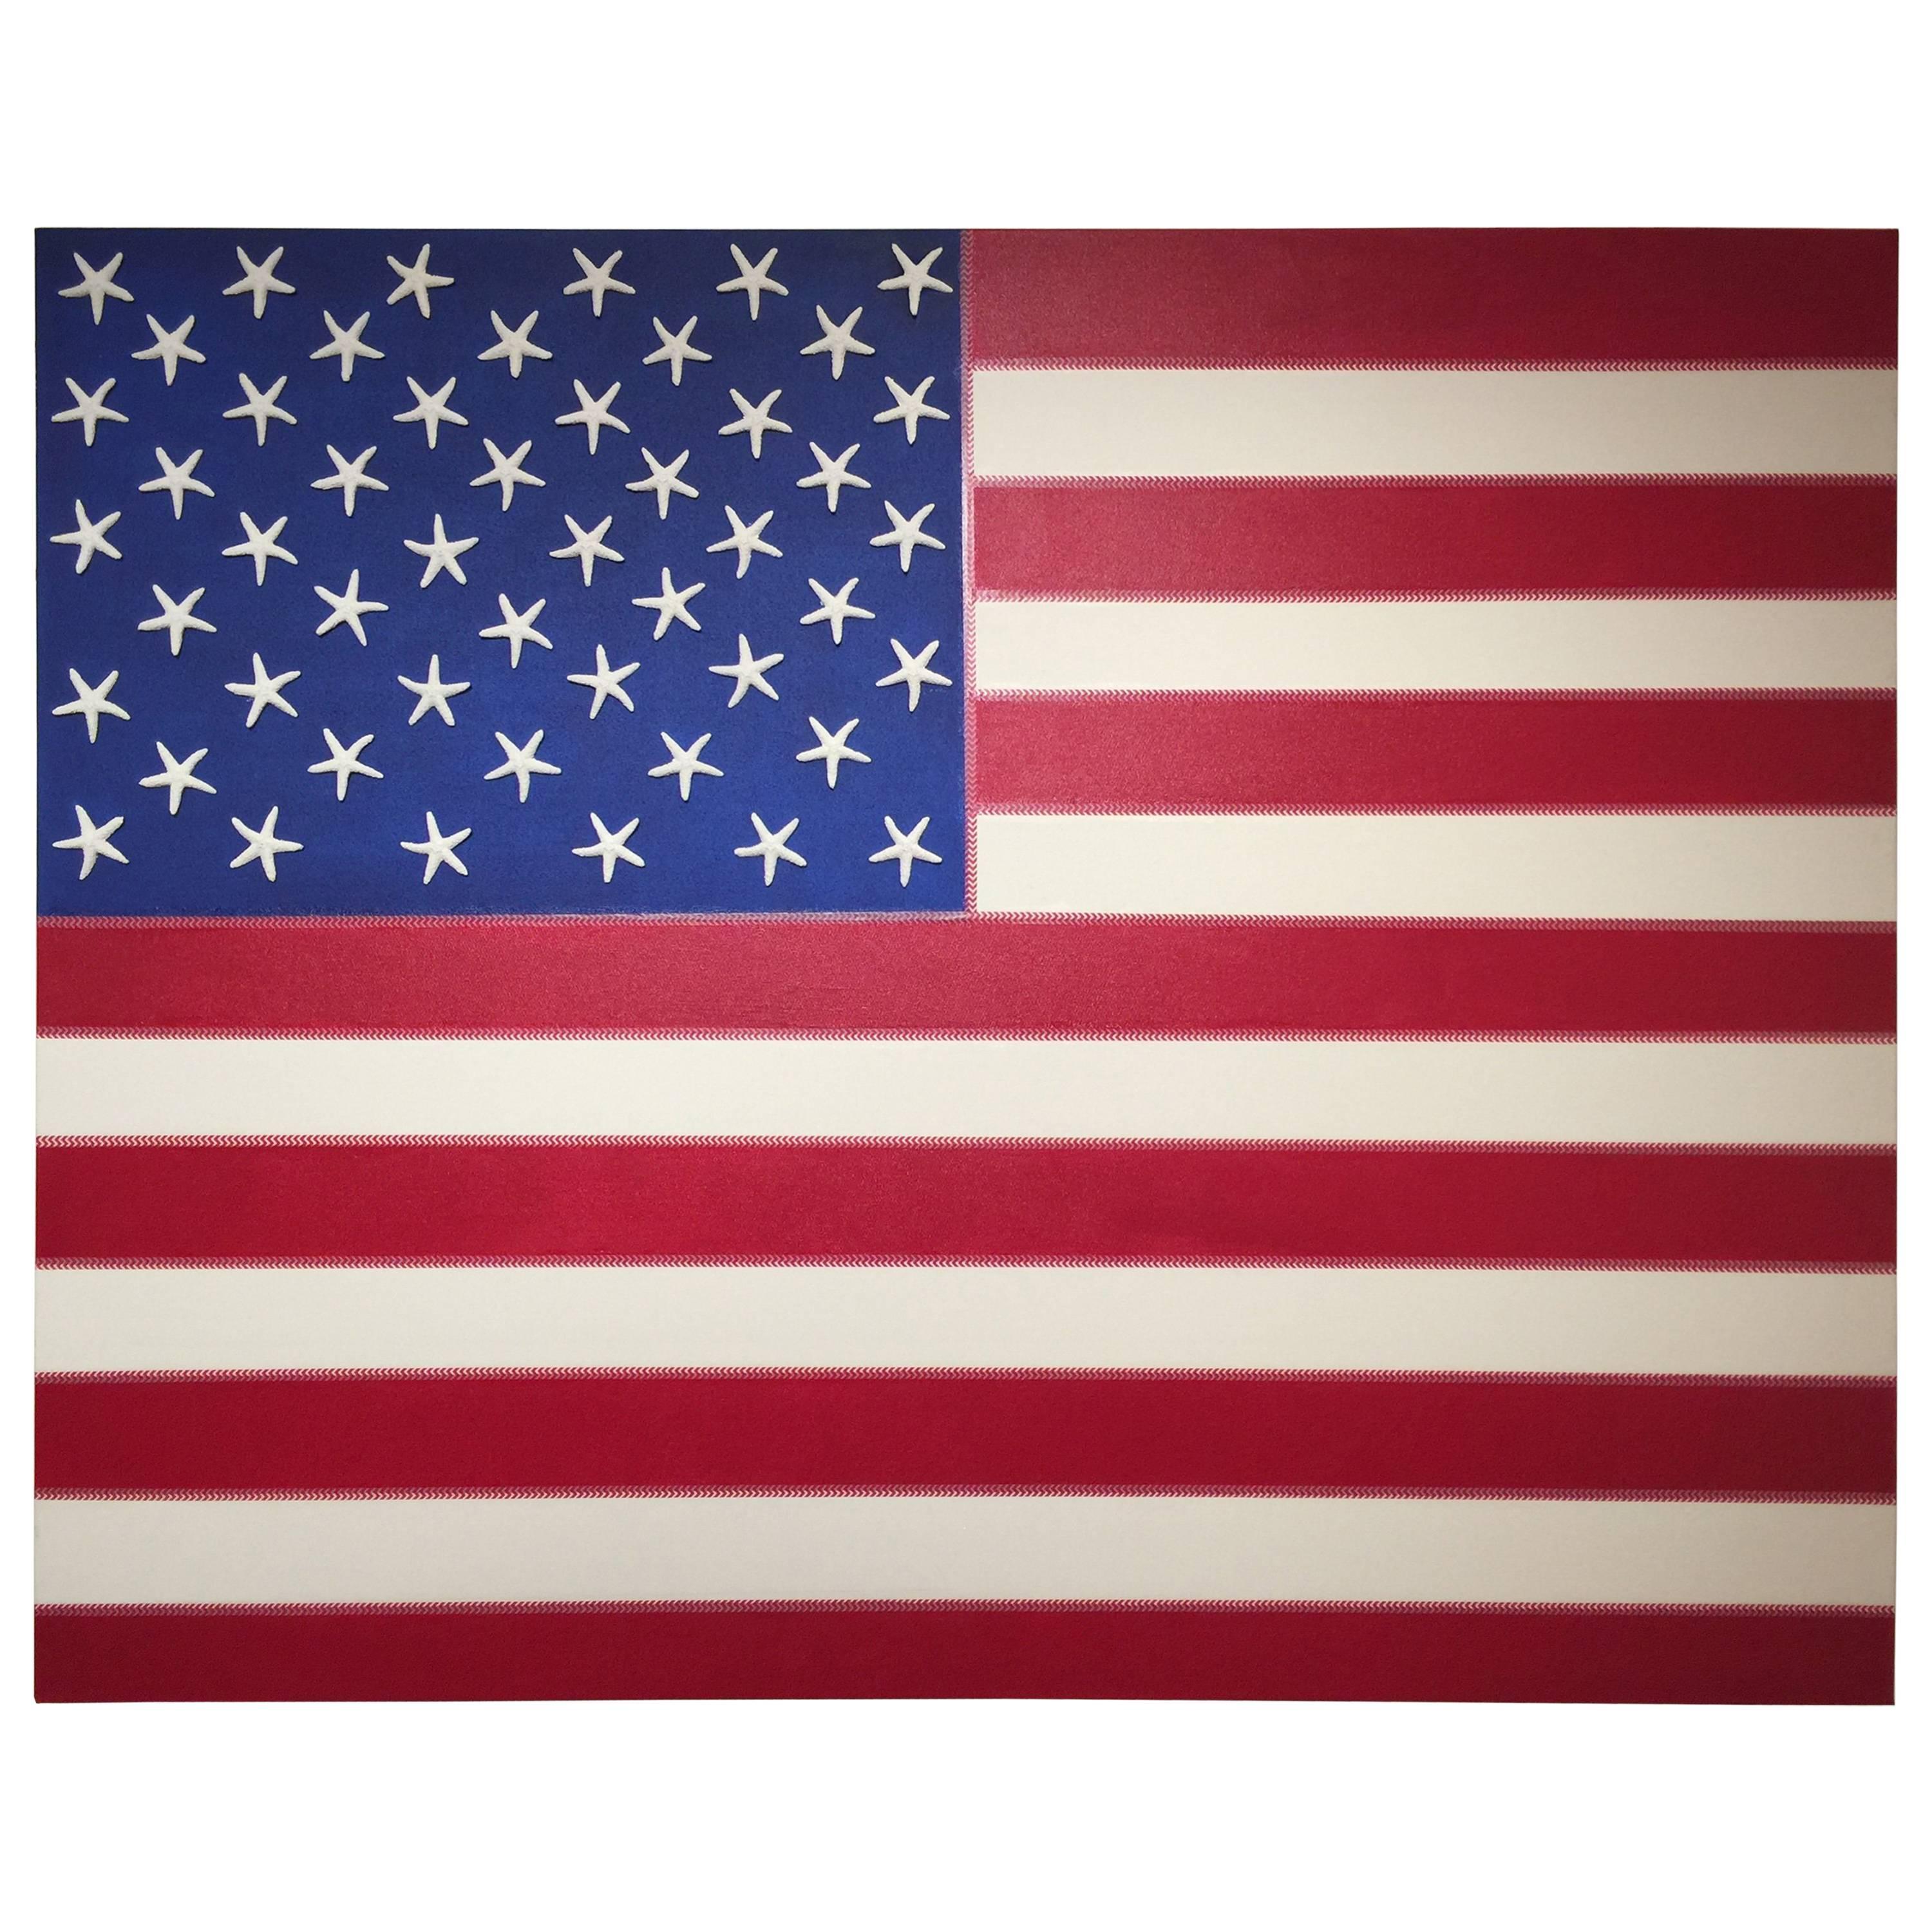 J. WOHNSEIDLER Amerikanische Flagge Nr. 1, 2017 Acryl auf Leinwand